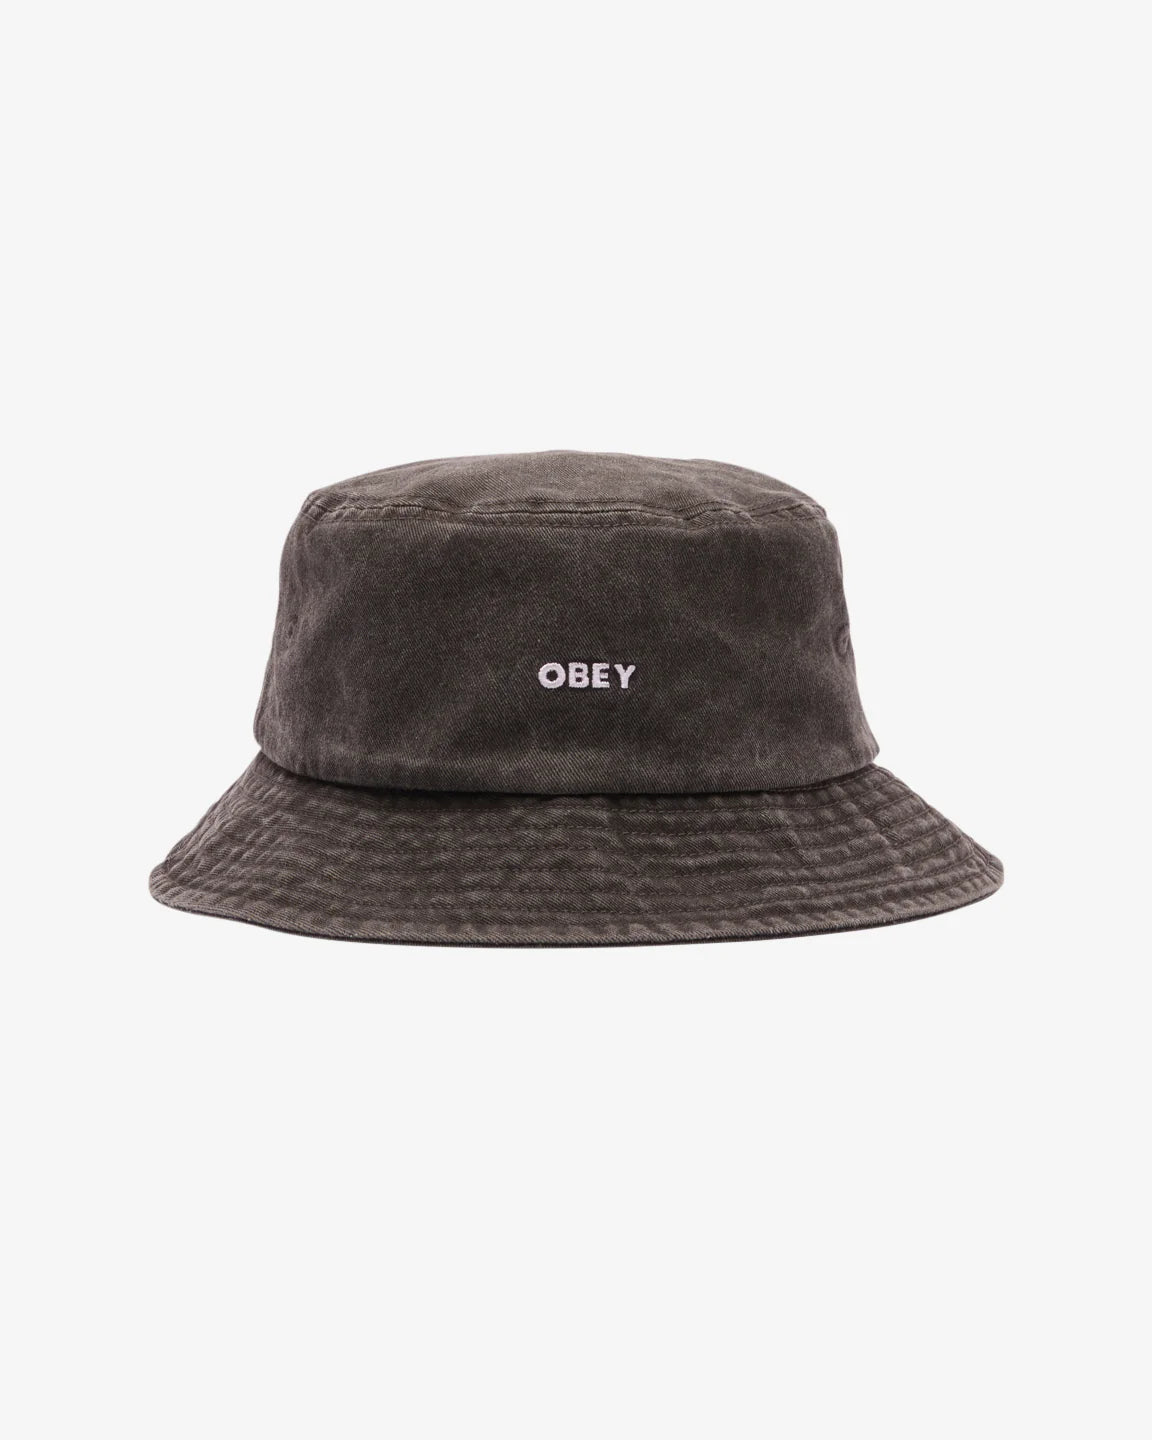 Accessories - Obey - Bold Pigment Bucket Hat - PLENTY